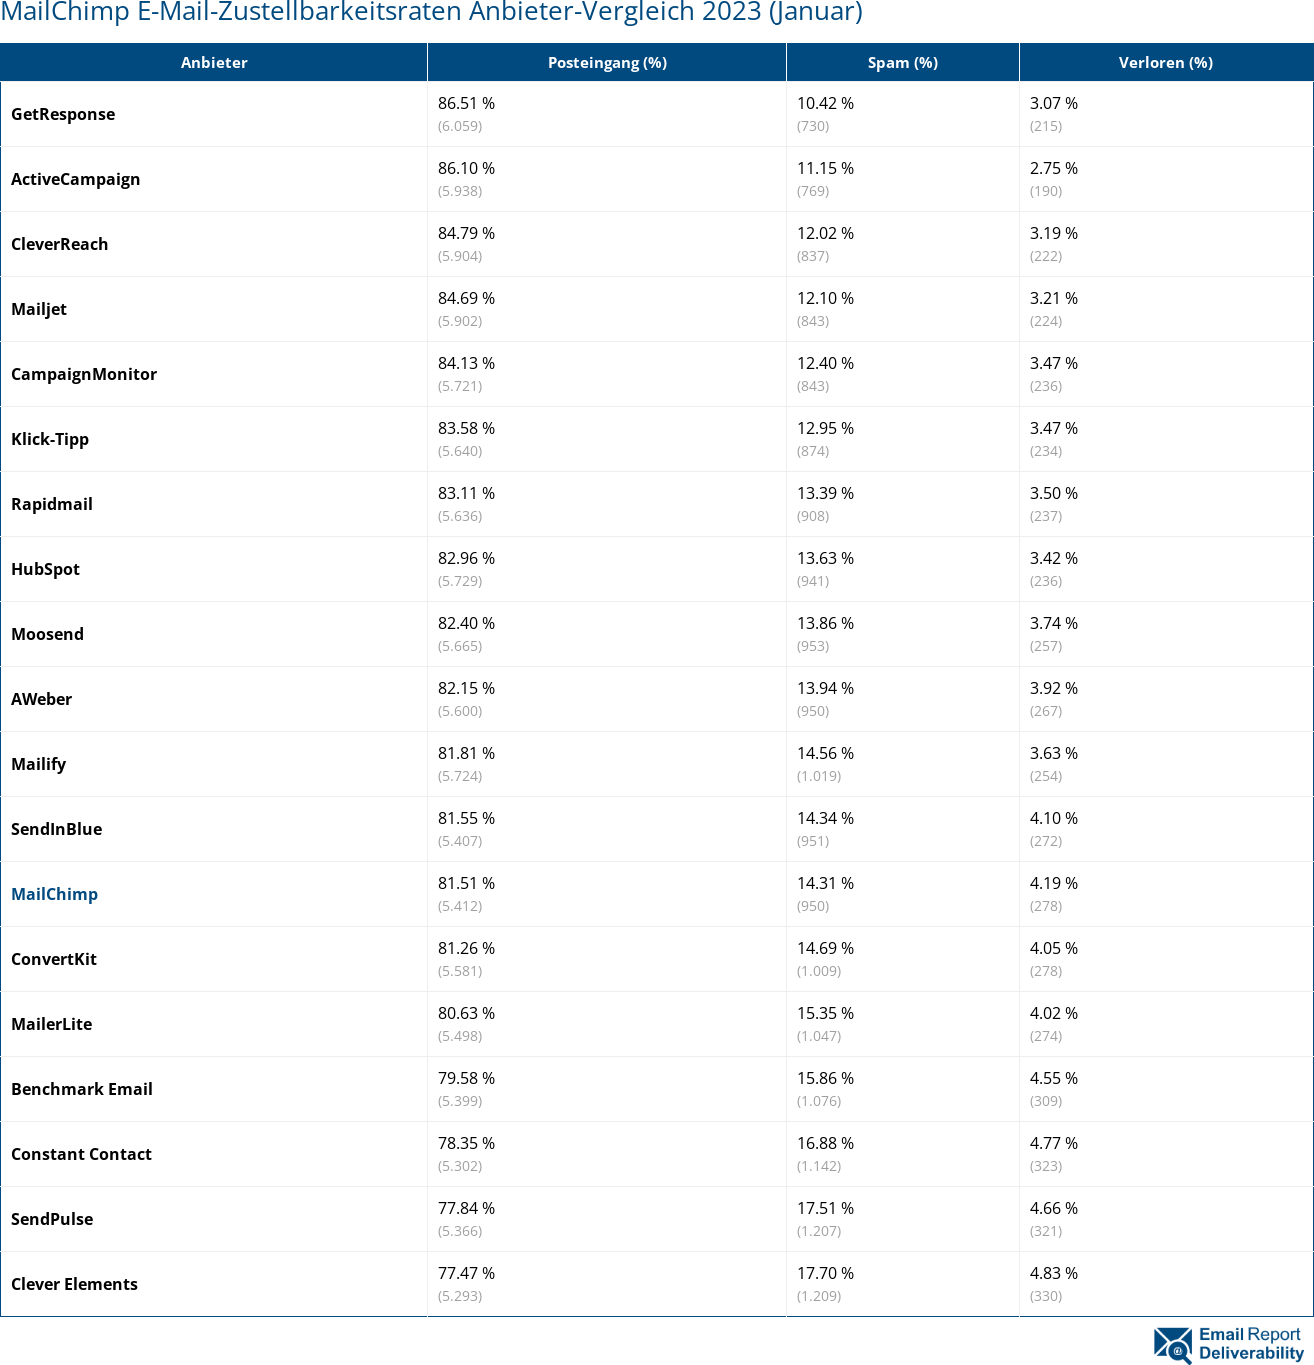 MailChimp E-Mail-Zustellbarkeitsraten Anbieter-Vergleich 2023 (Januar)